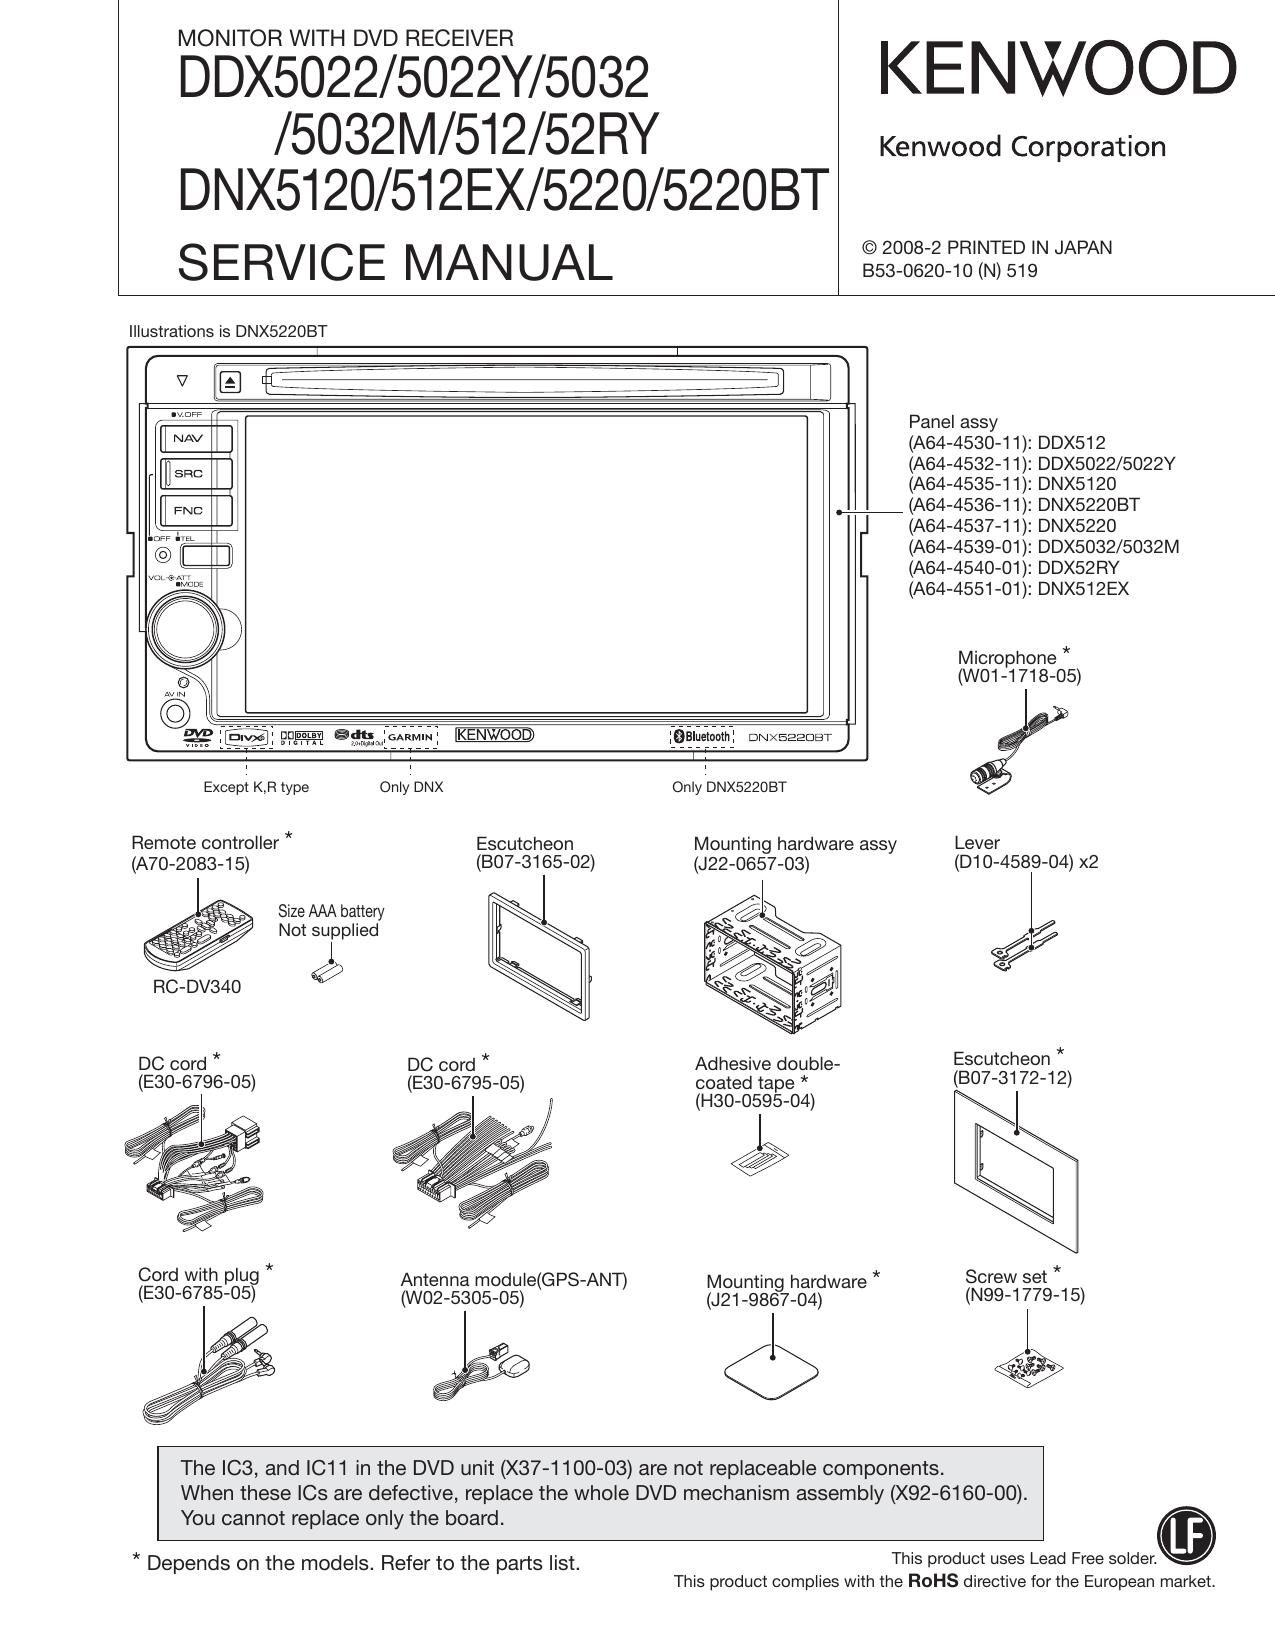 Kenwood DDX 5032 M HU Service Manual